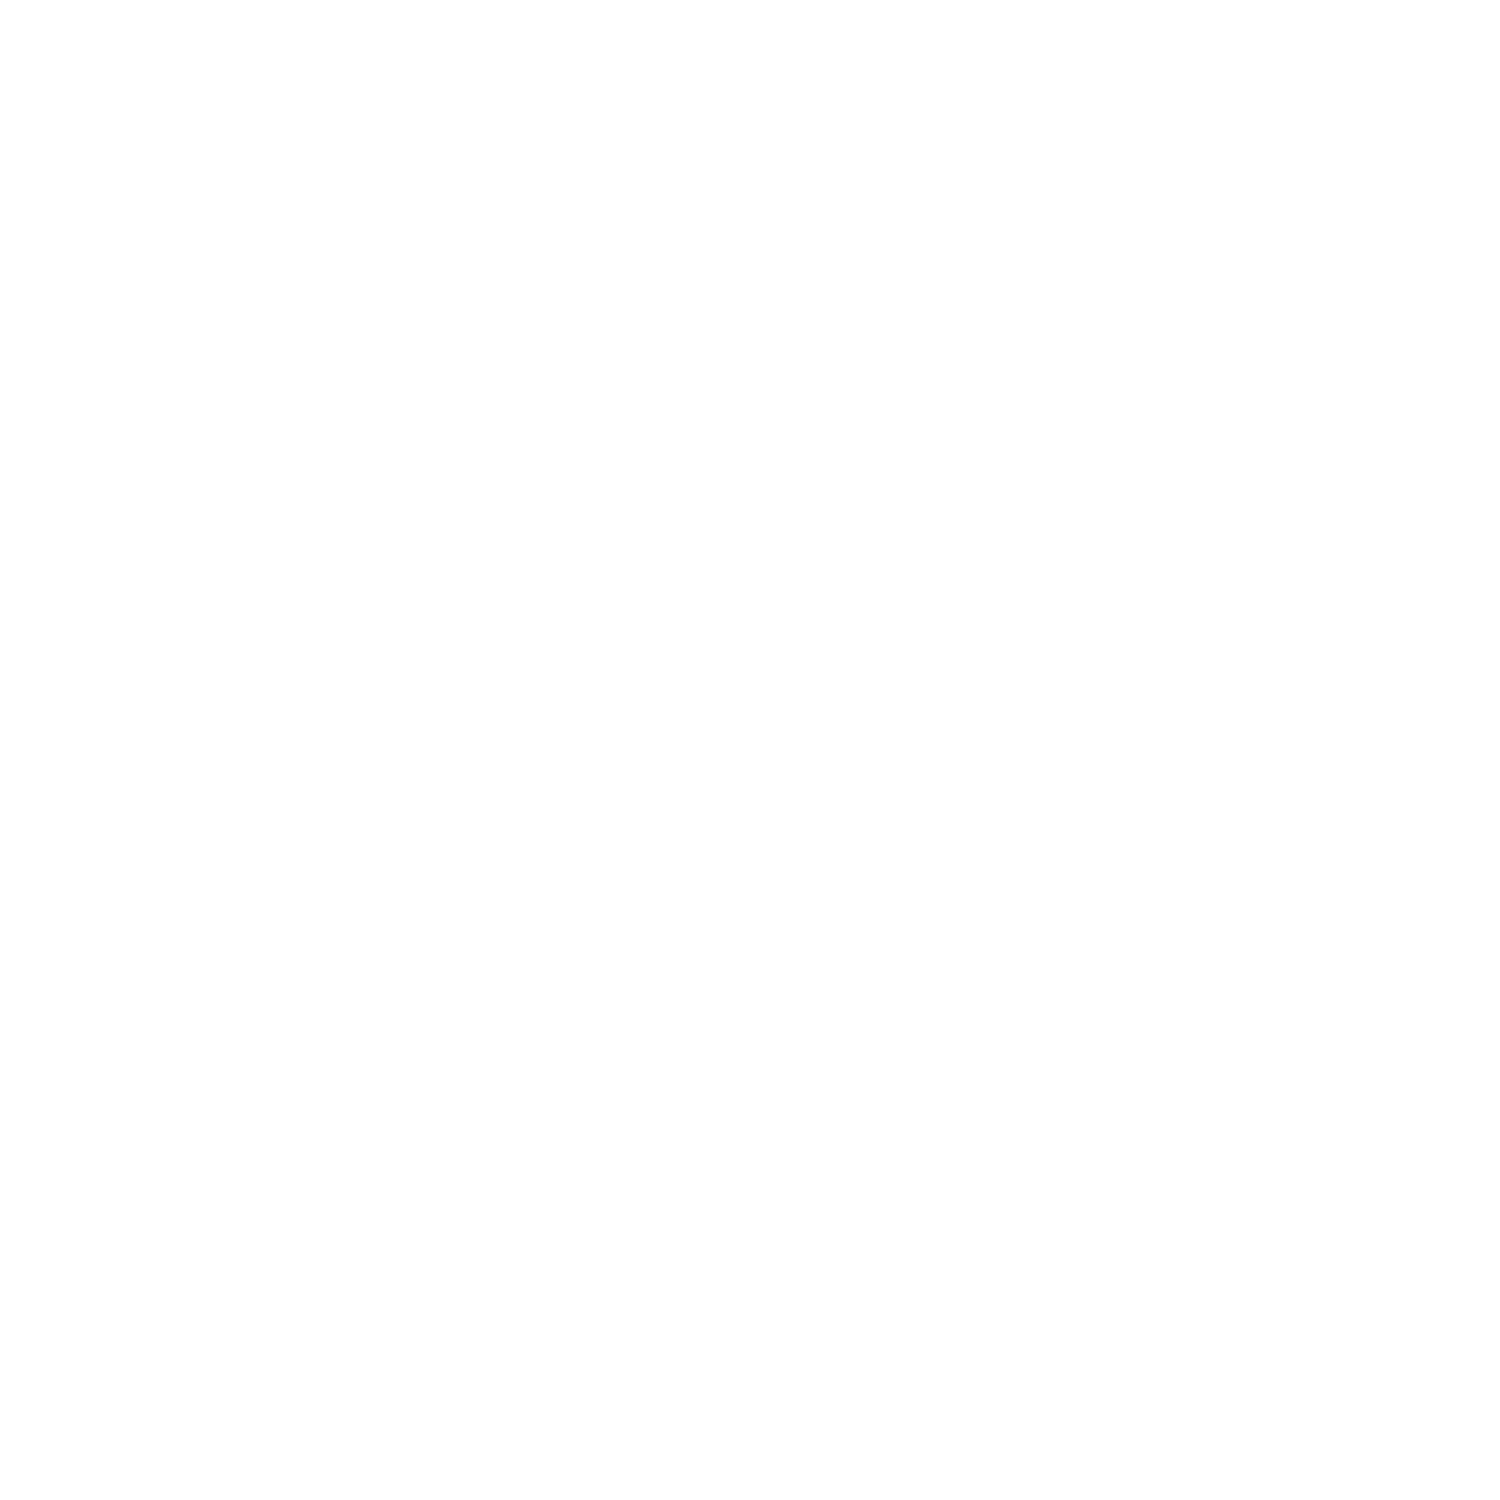 Snowflakes Transparent Images